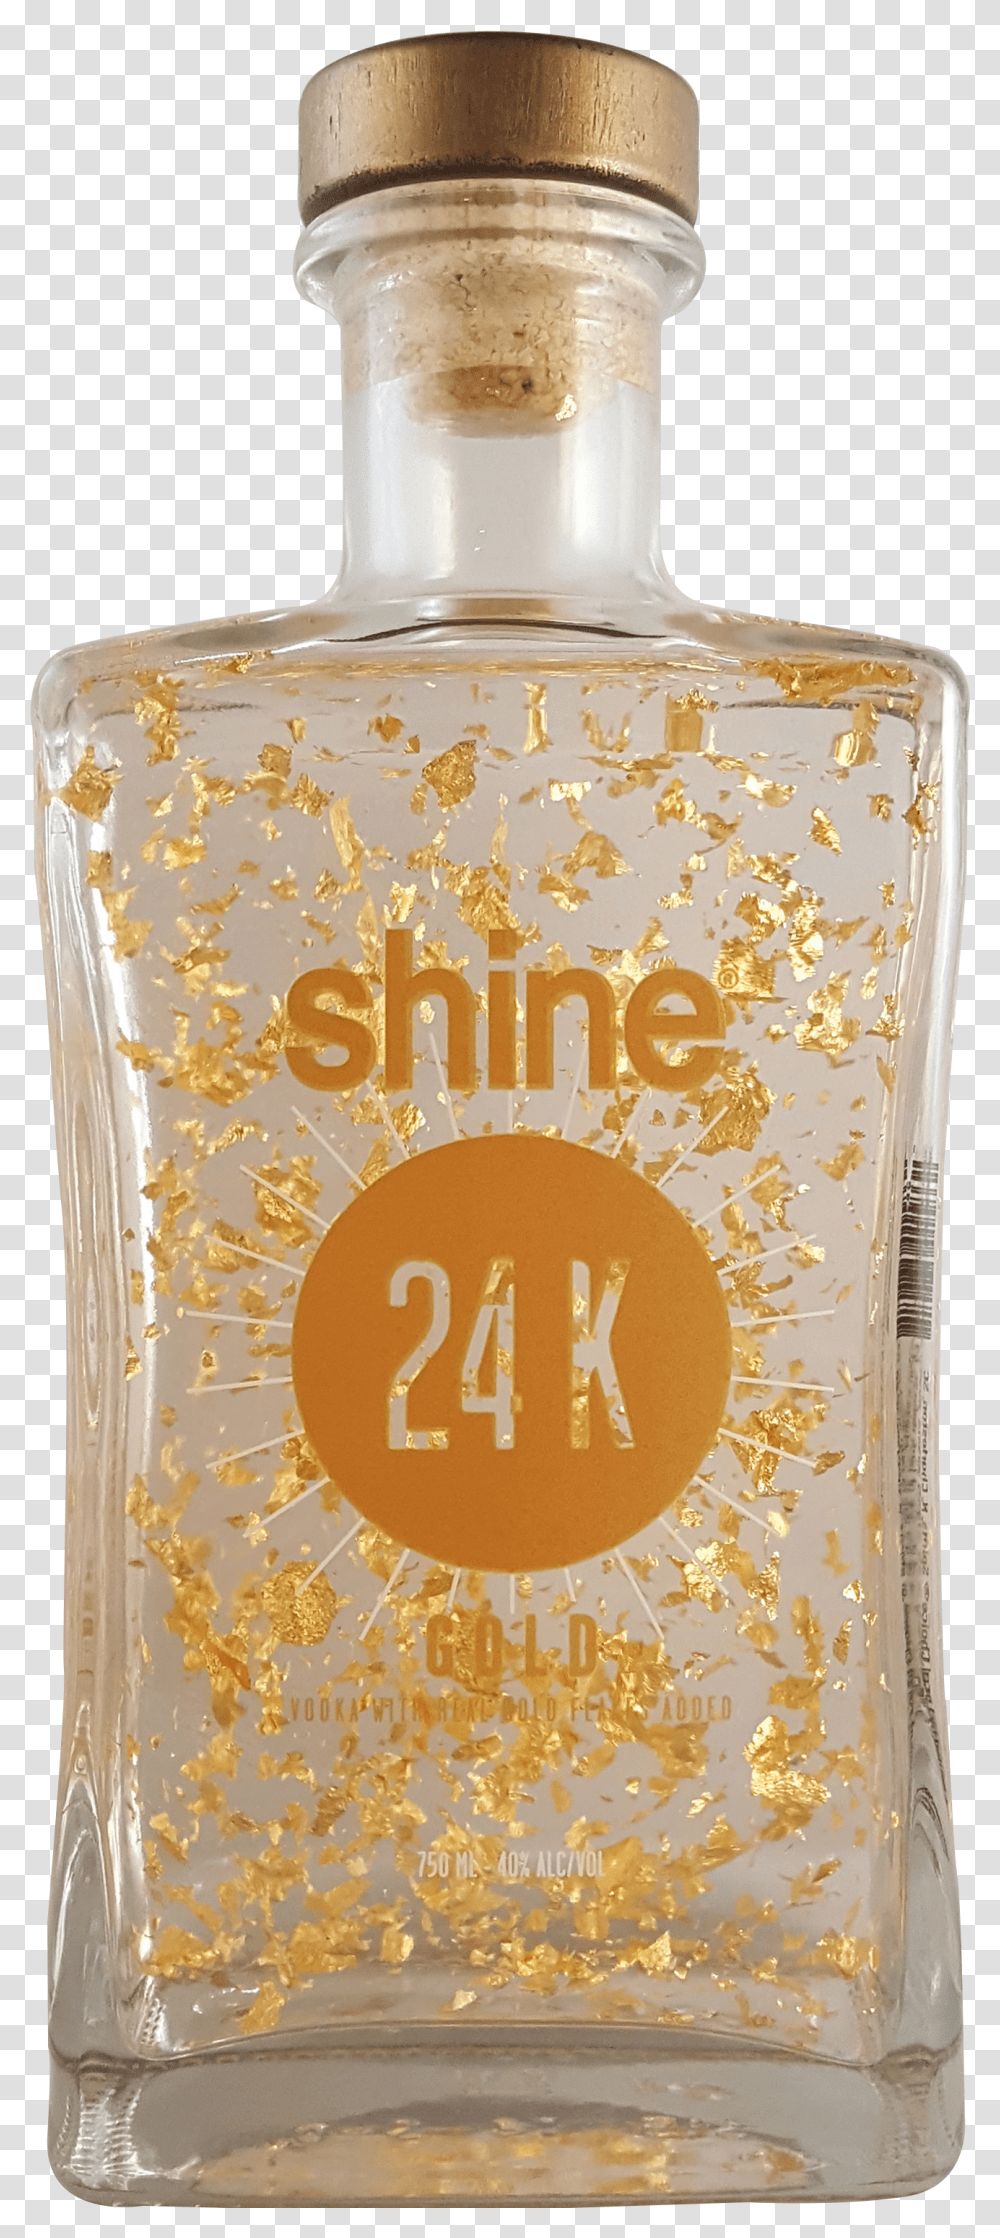 Shine 24k Vodka Local Choice Spirits Glass Bottle Transparent Png